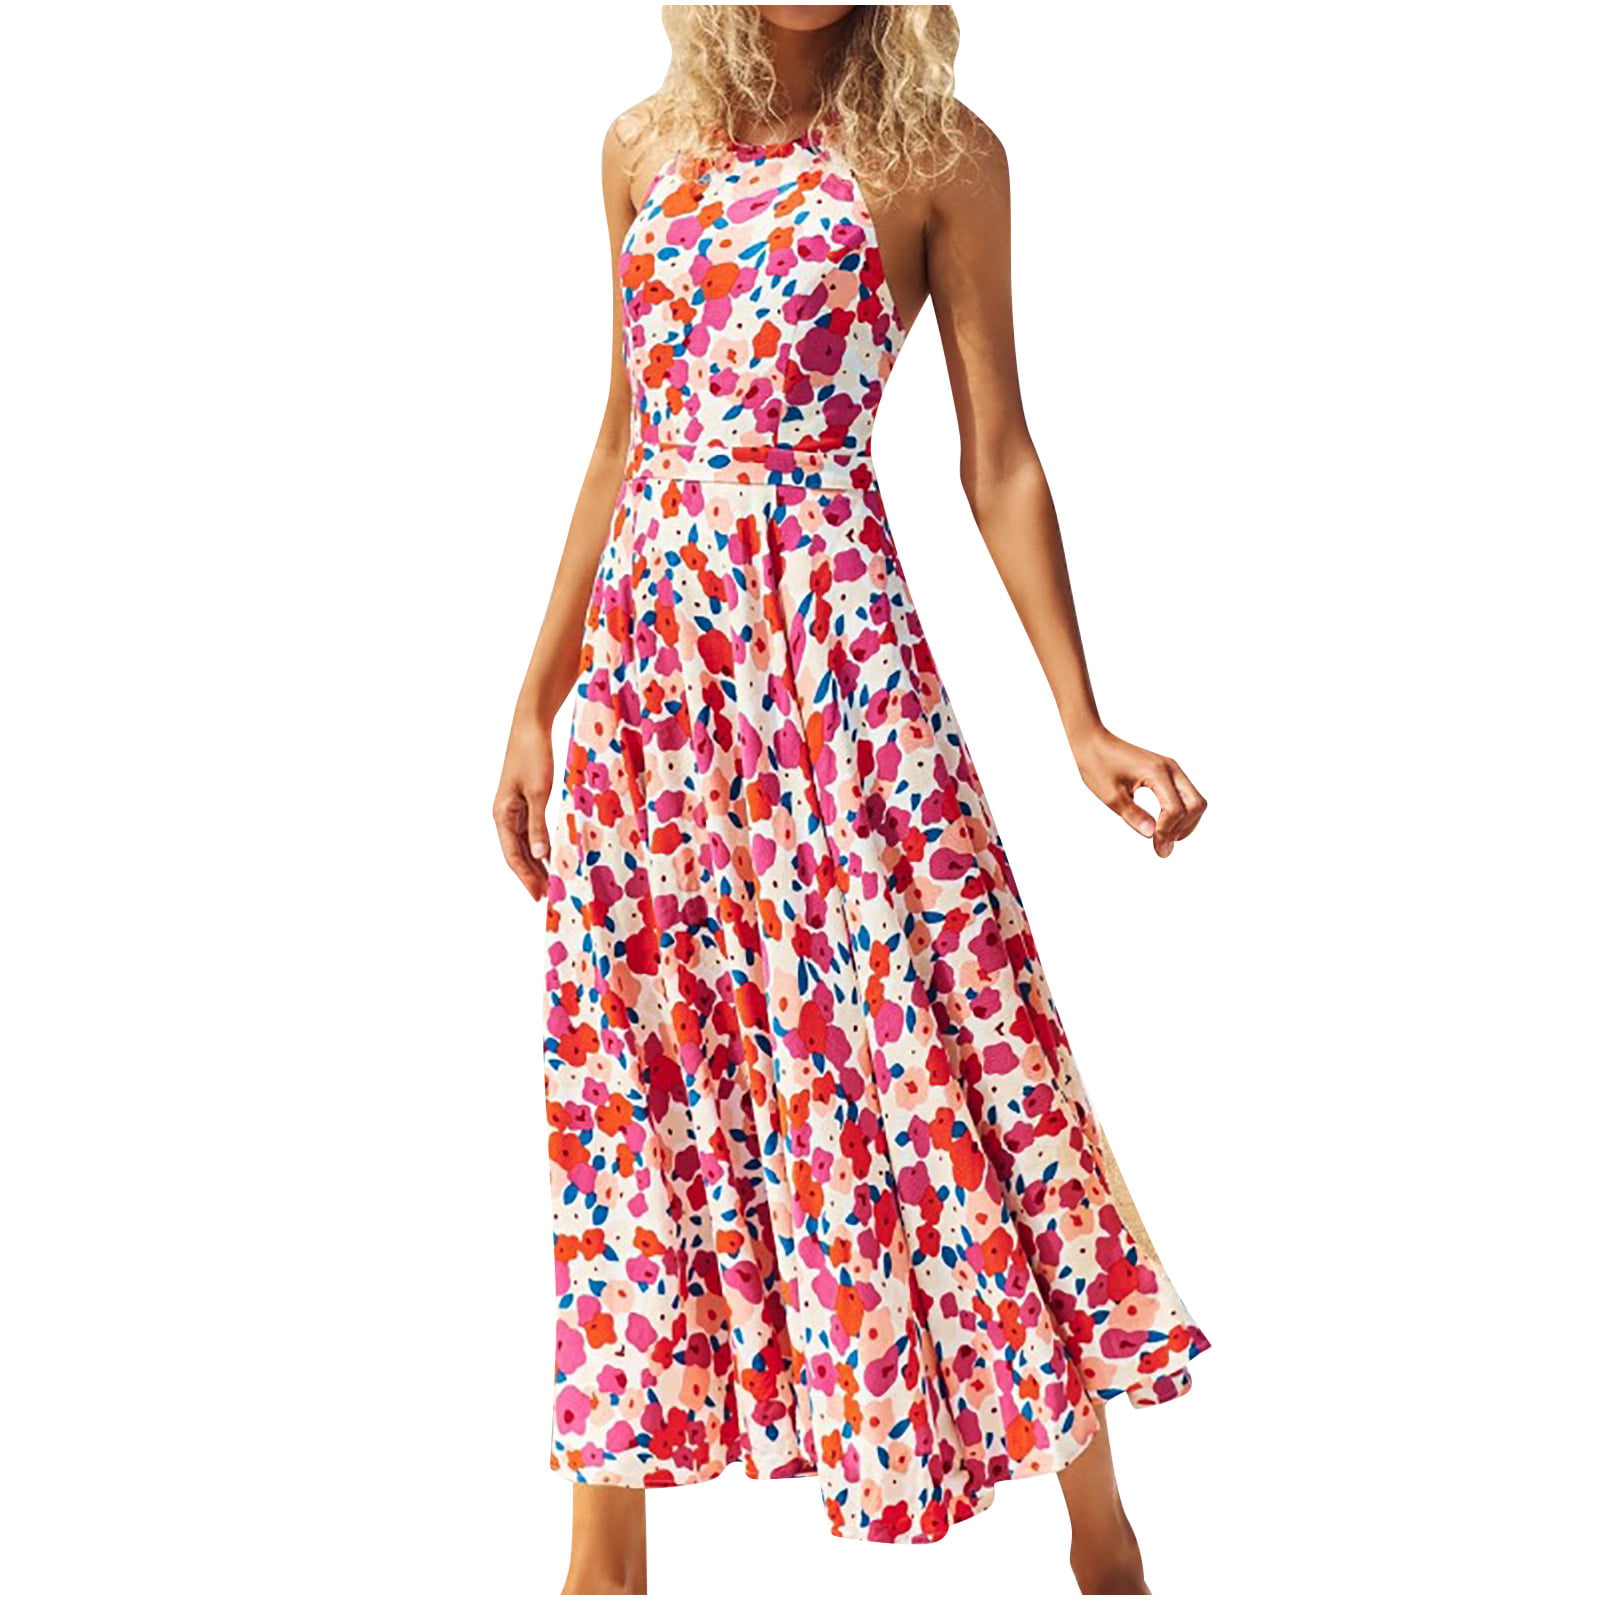 Tarmeek Women's Summer Dresses Casual Floral Print Sleeveless Halter ...